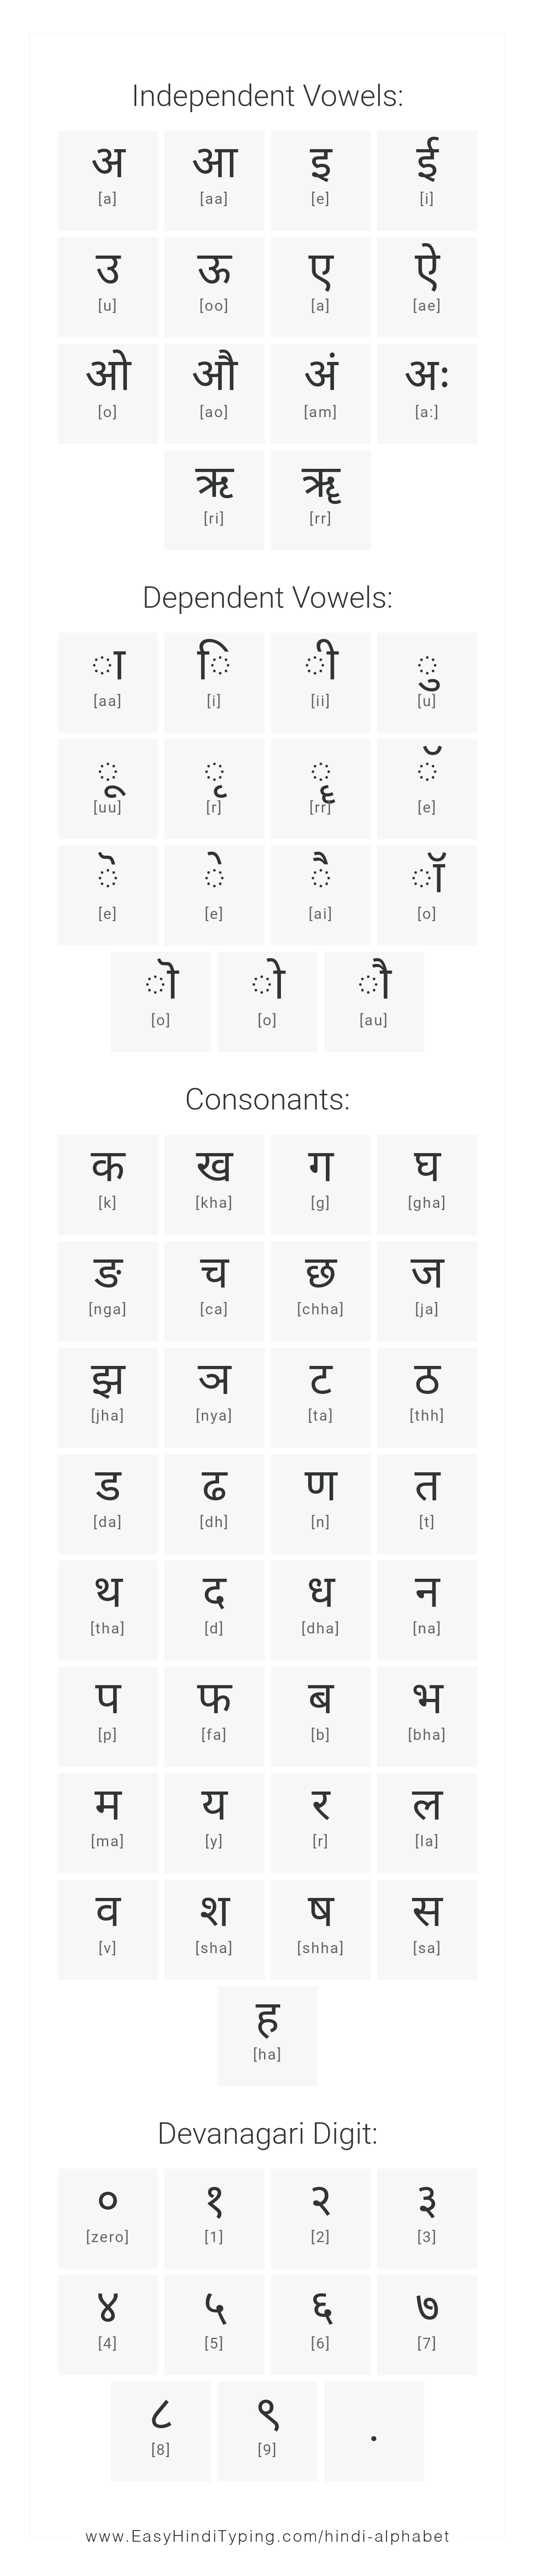 FREE Hindi Alphabet chart with complete Hindi Vowels, Hindi